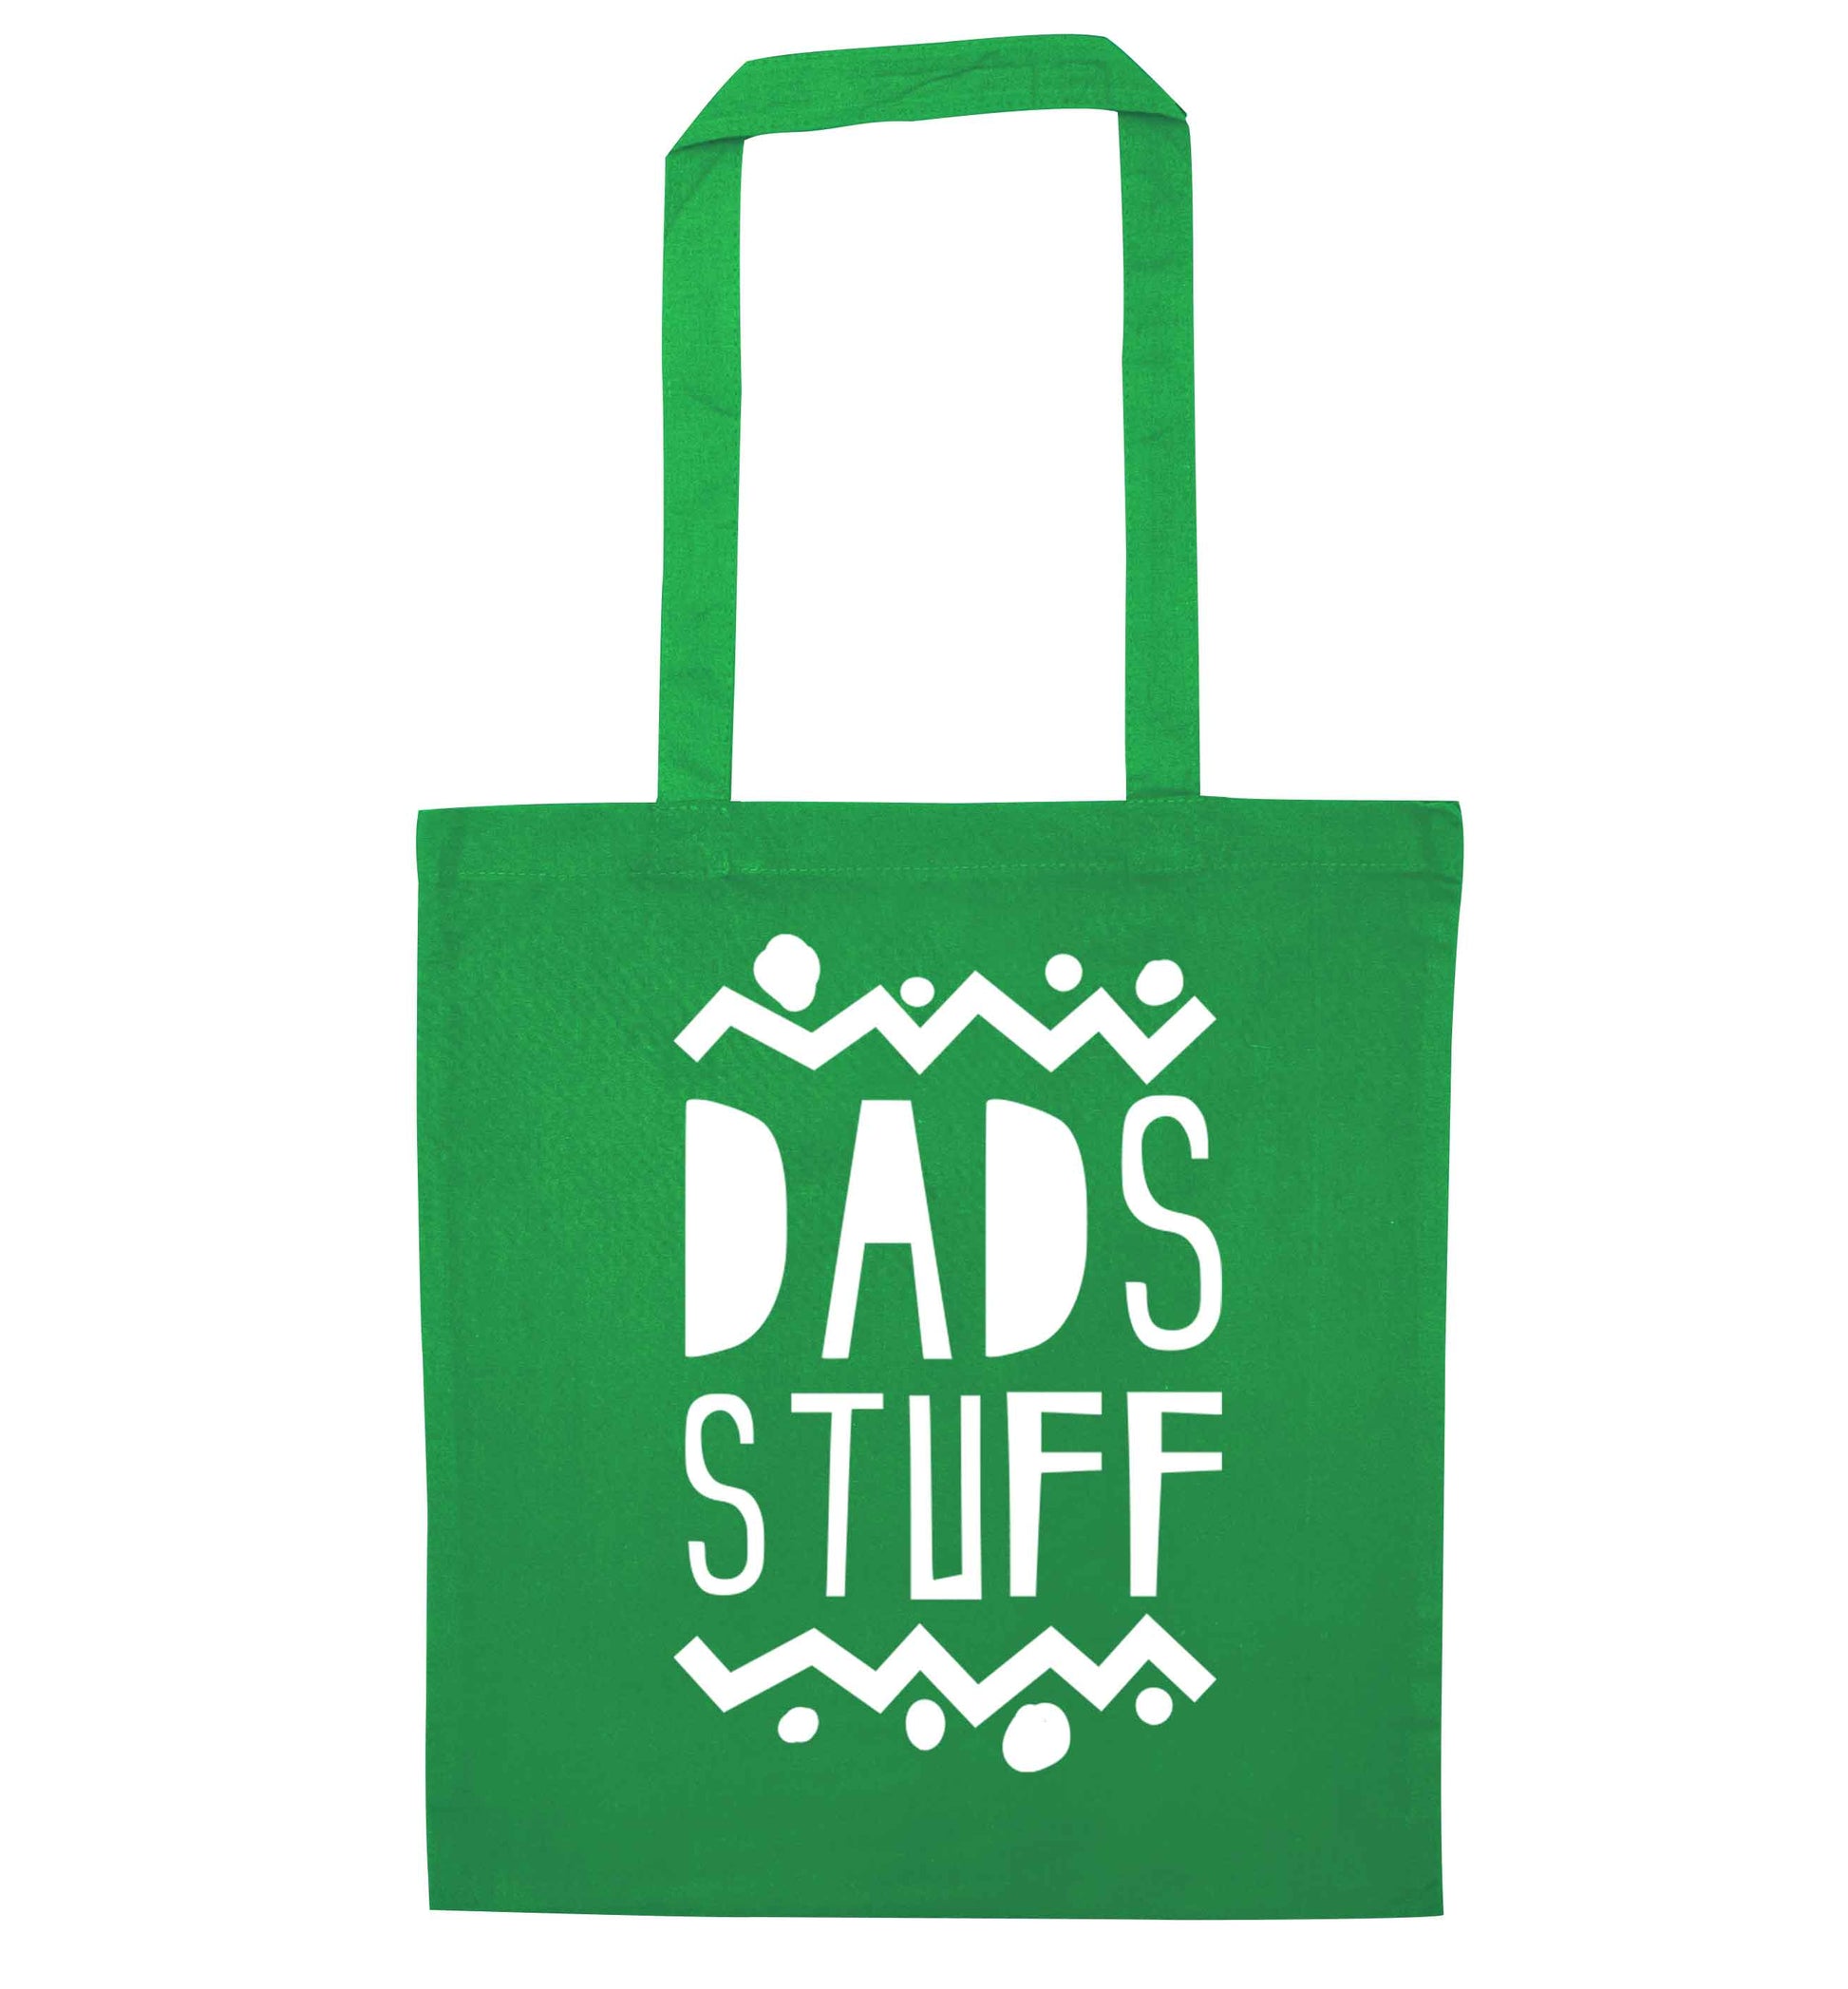 Dads stuff green tote bag